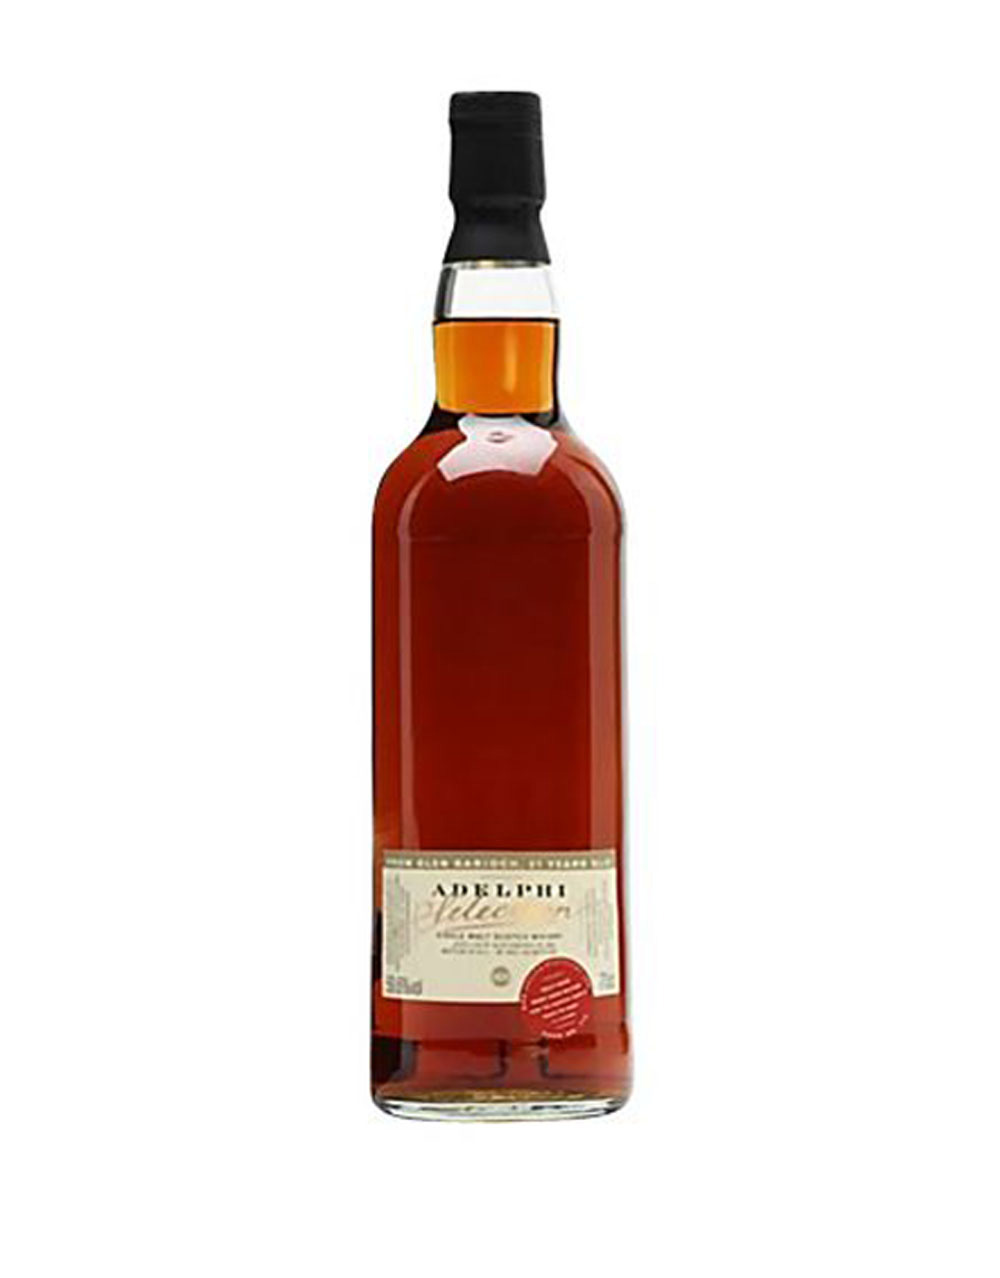 Adelphi Selection Glen Garioch 21 Year Old Single Malt Scotch Whisky